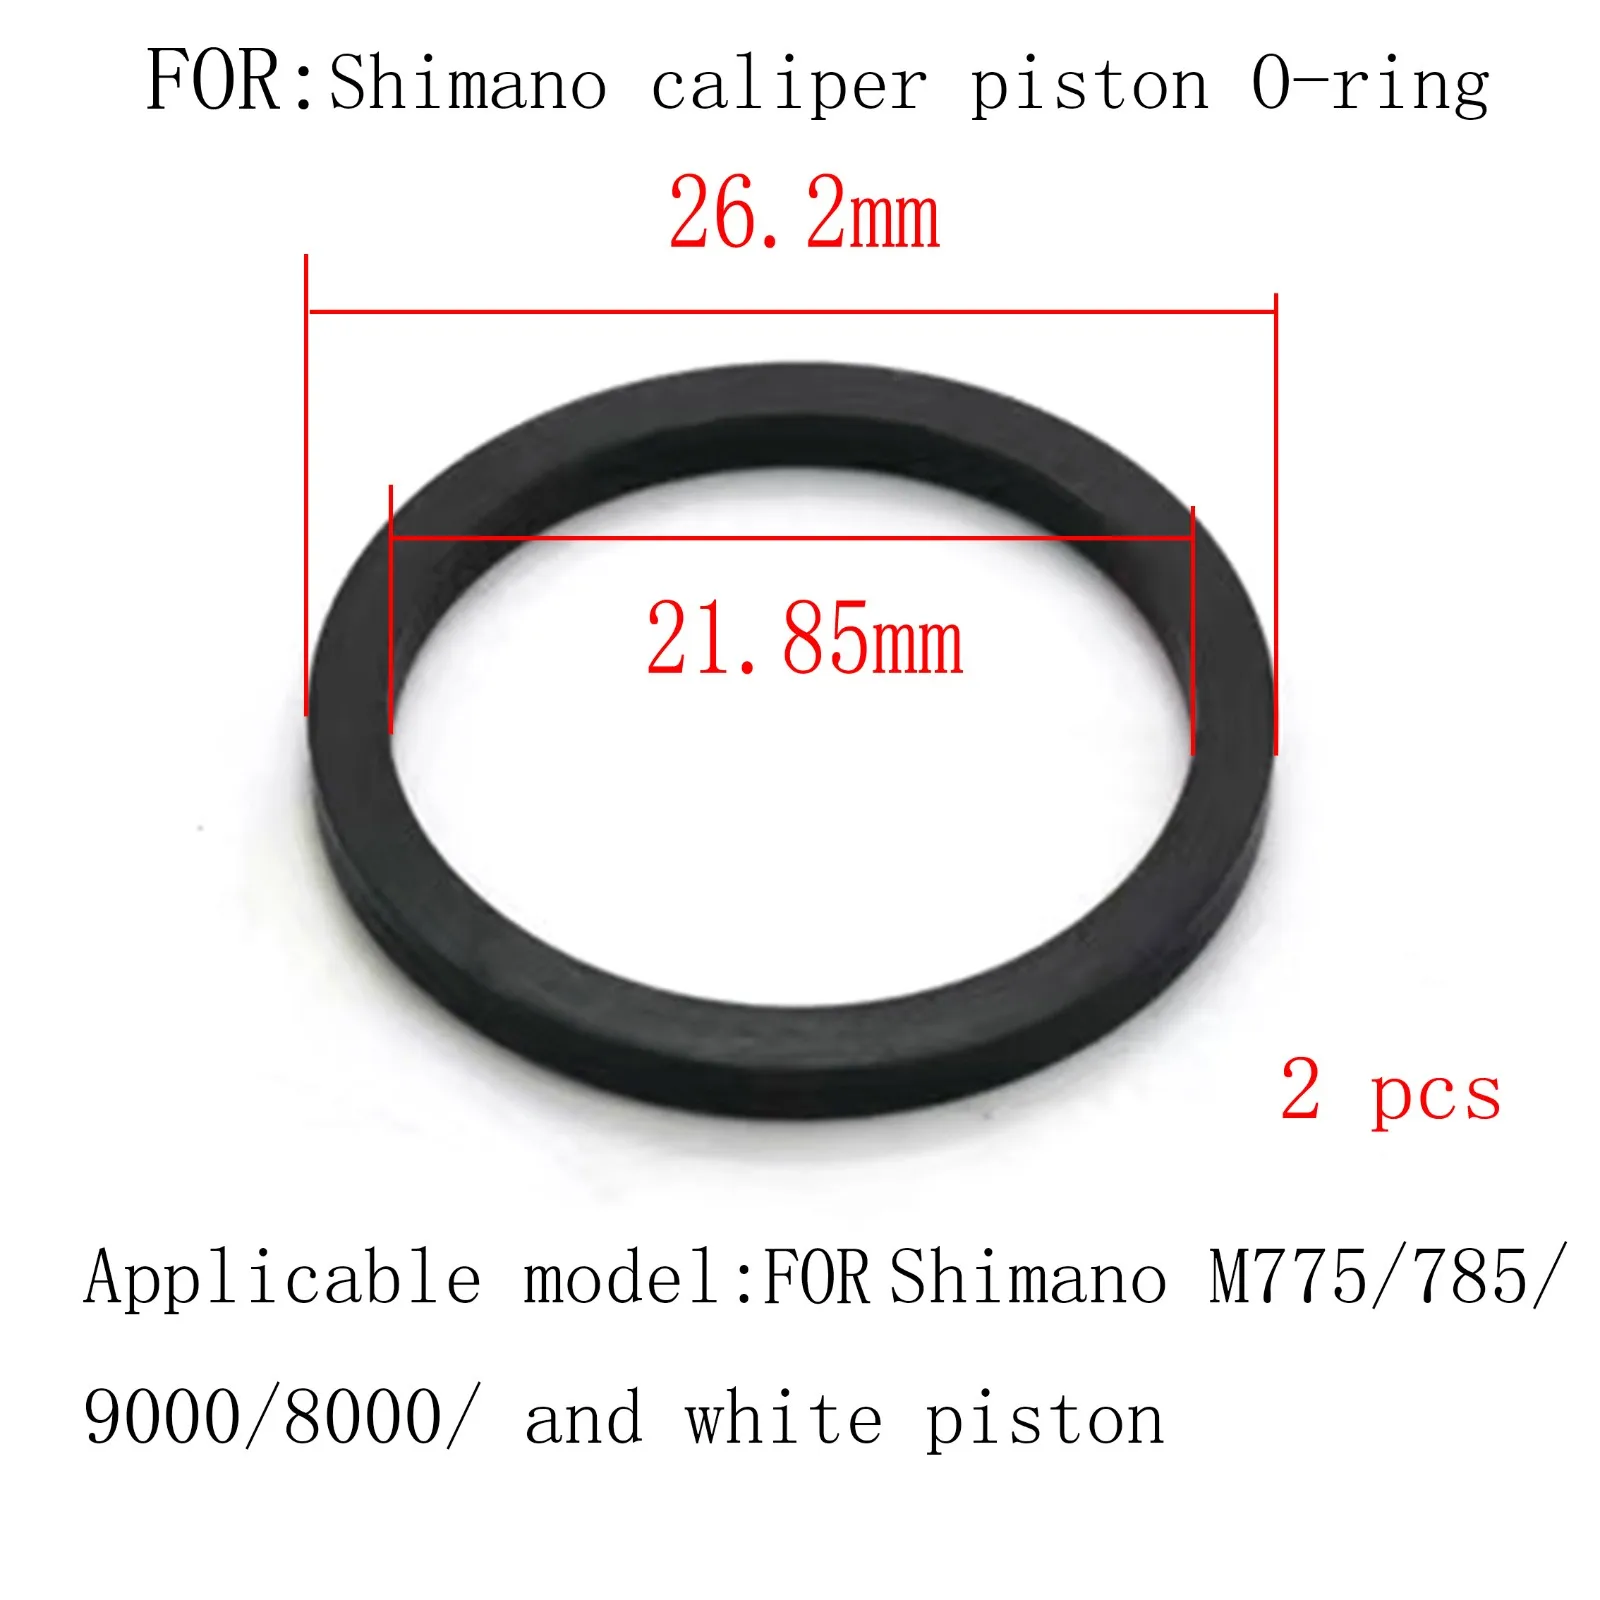 

2pcs MTB Road Bike Bicycle Hydraulic Brake Caliper Piston Sealing Ring For-Shimano Shimano 355/395/445/447/595/610 Bicycle Part